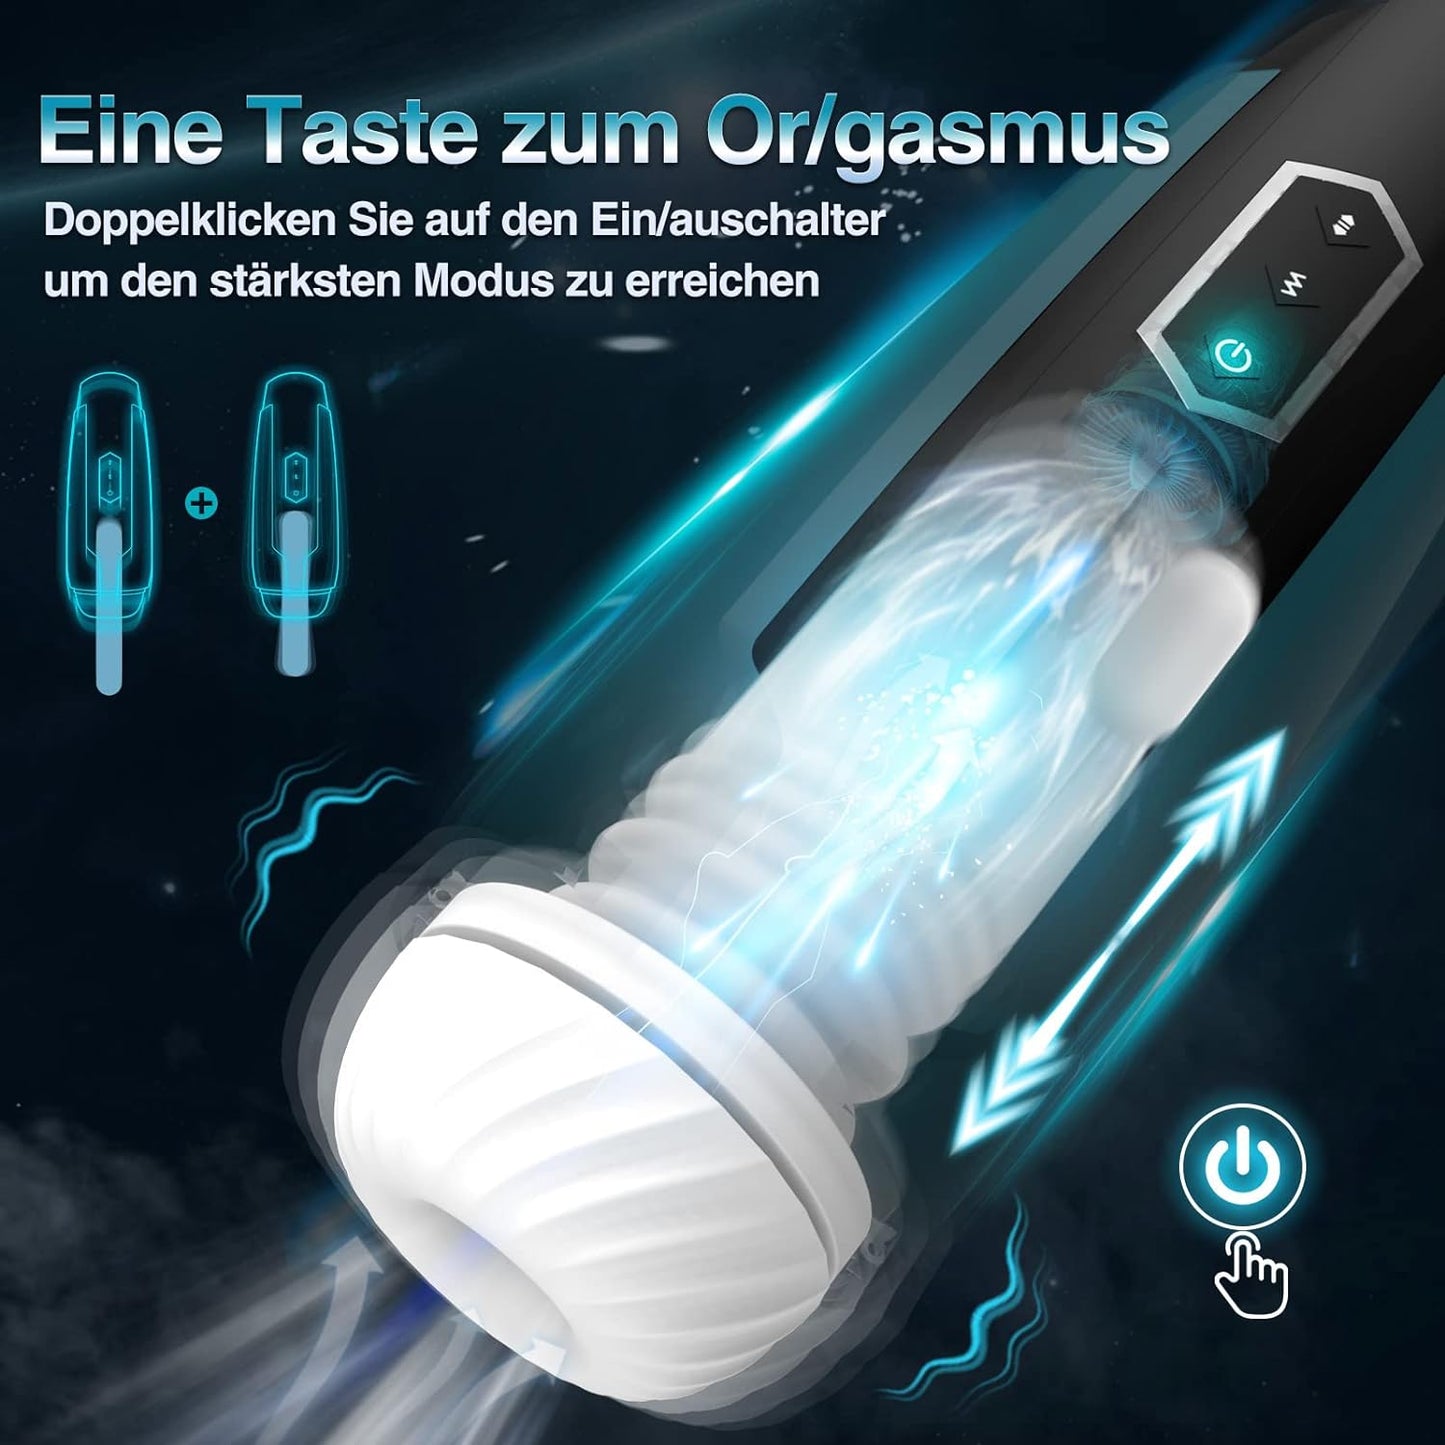 Electric masturbator Cup Galaxy with 5 telescopic modes 5 vibration modes 